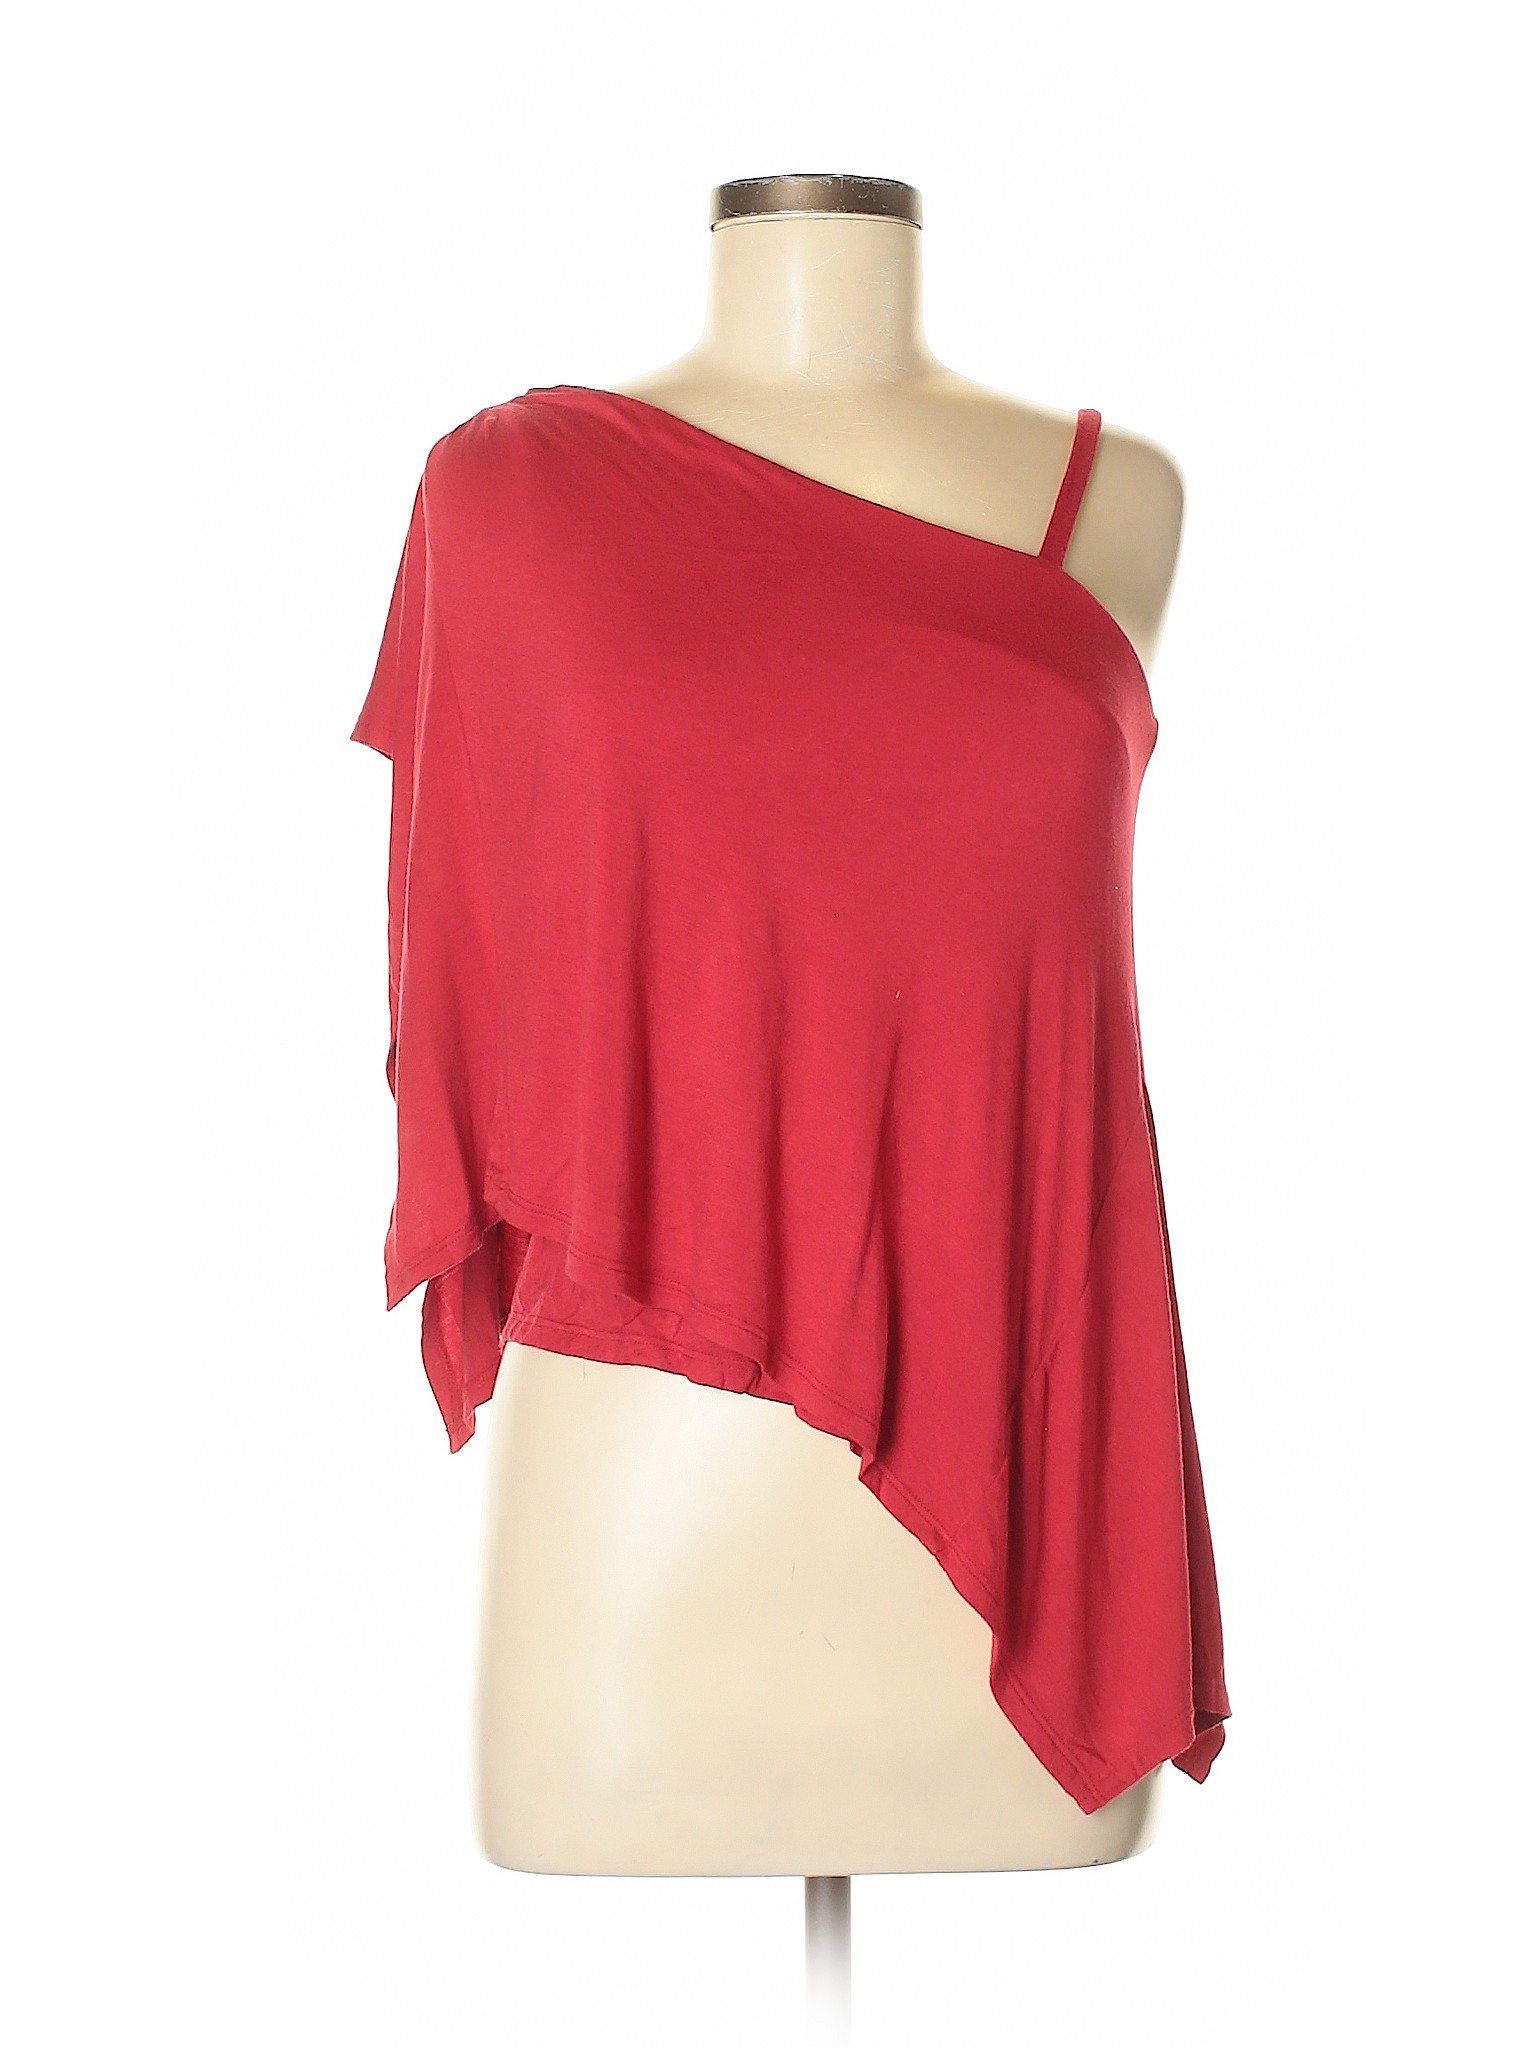 Ella Moss Women Red Short Sleeve Top S | eBay